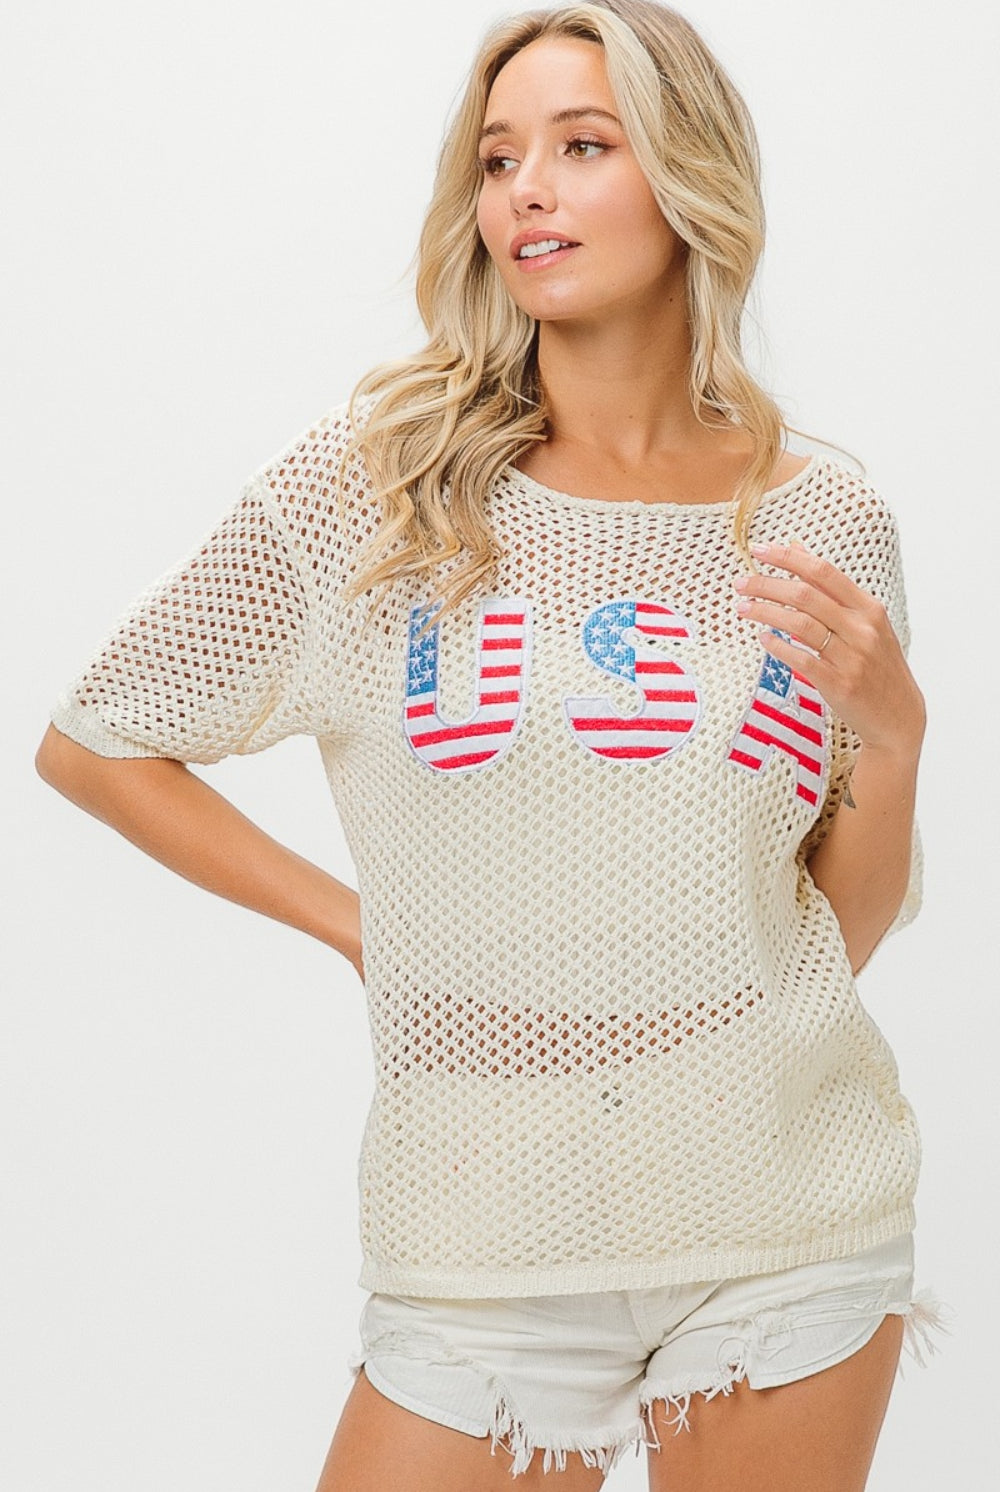 BiBi US Flag Theme Knit Cover Up-Krush Kandy, Women's Online Fashion Boutique Located in Phoenix, Arizona (Scottsdale Area)